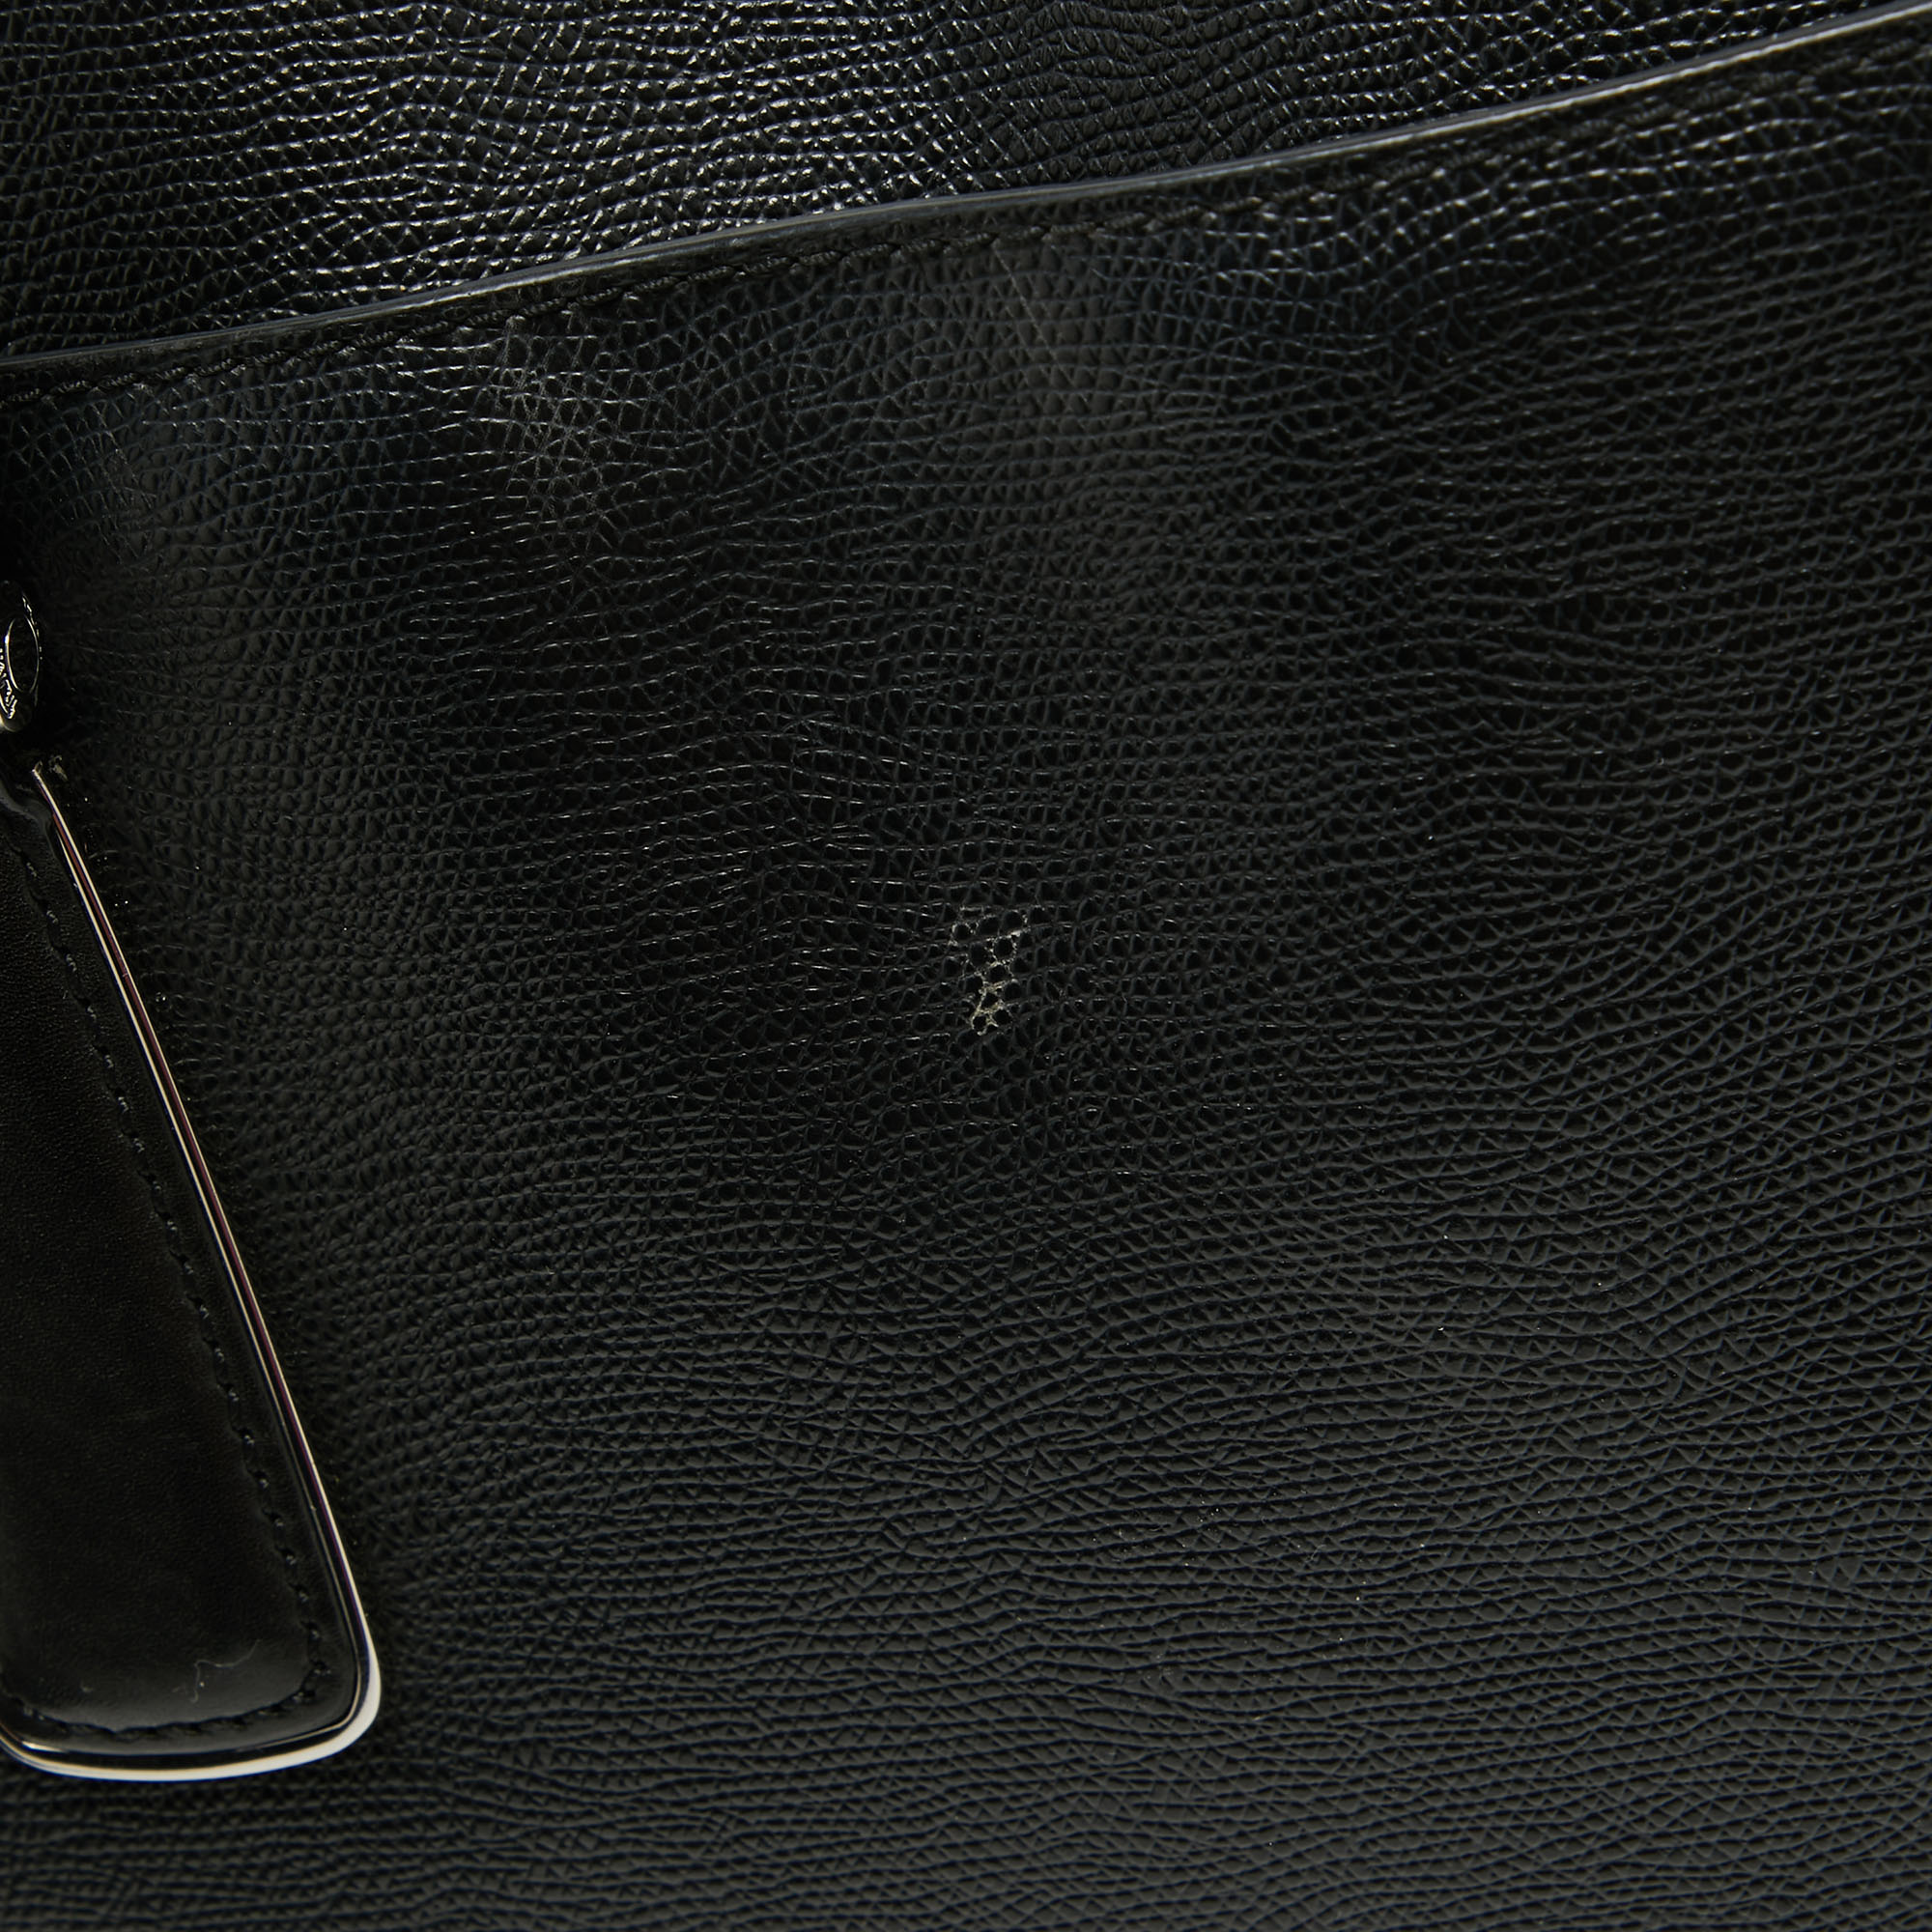 Tumi Black Leather Stanton Nia Commuter Briefcase Bag